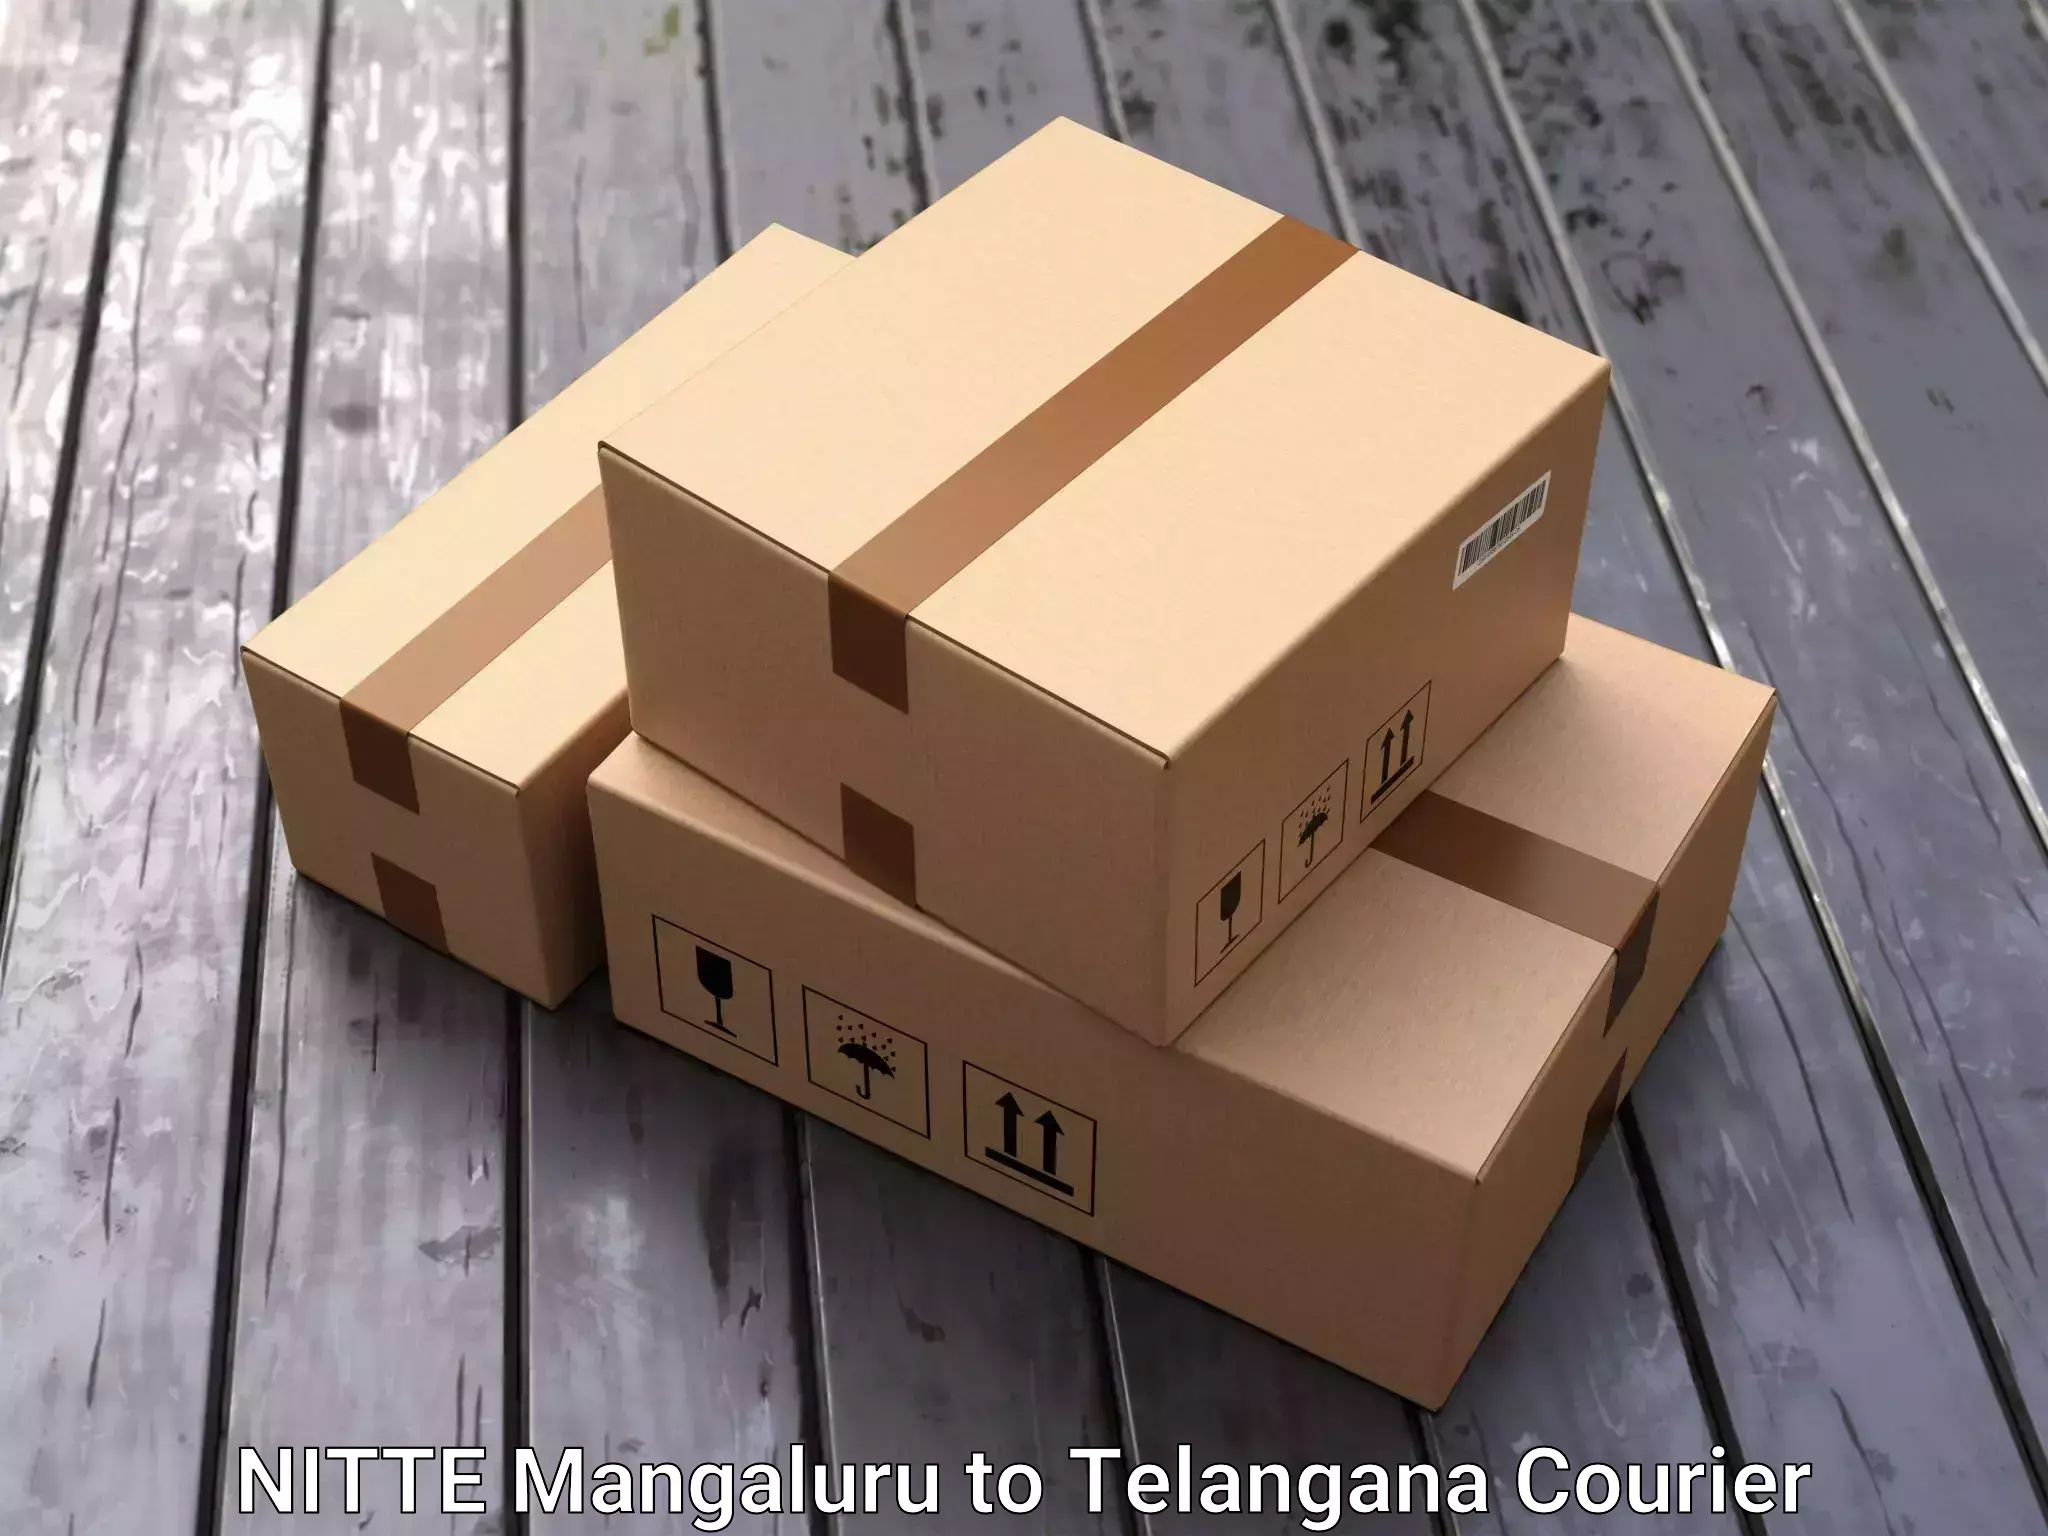 Professional relocation services NITTE Mangaluru to Gangadhara